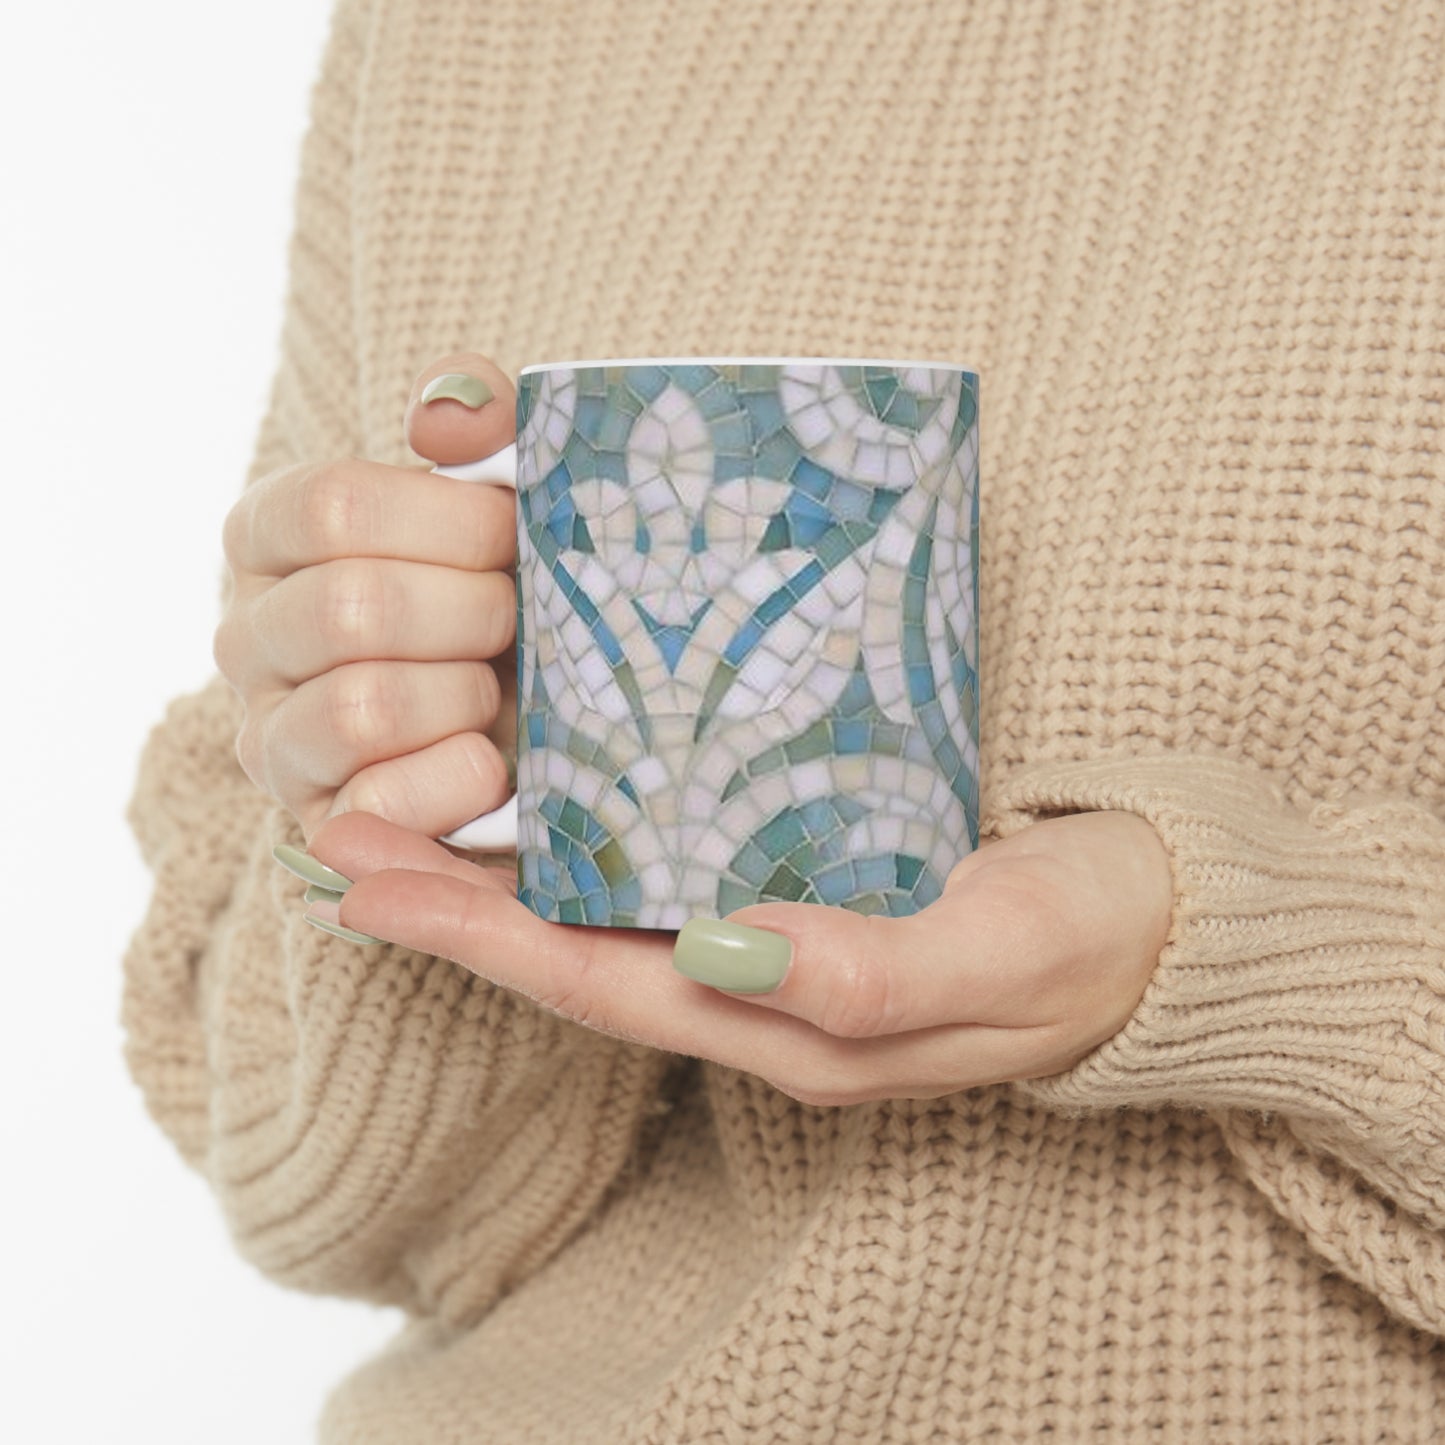 Aqua Mosaic Tile Hot Beverage Coffee Tea Decorative Ceramic Mug 11oz